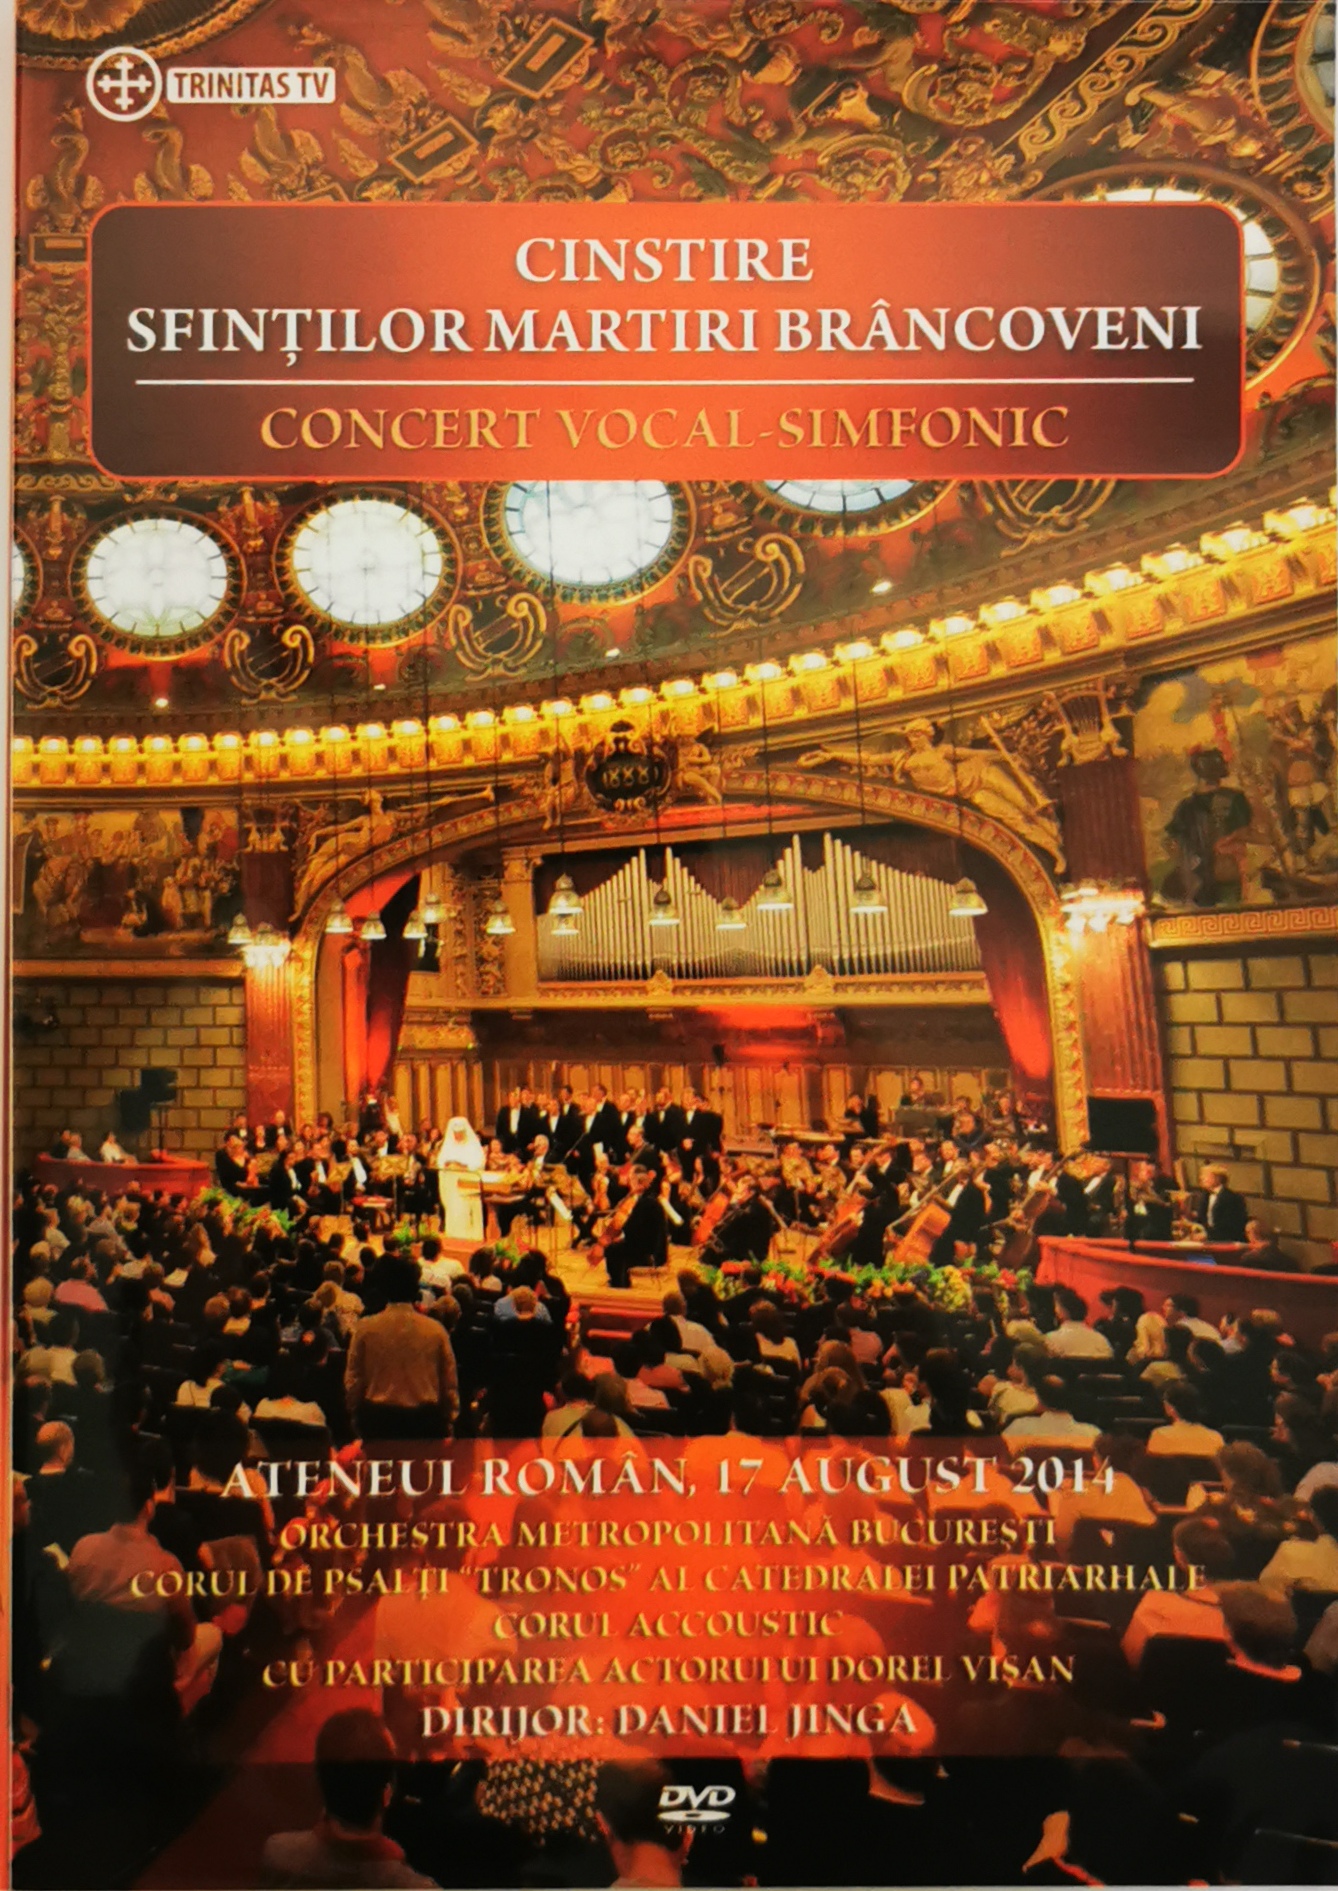 DVD Cinstire Sfinților Martiri Brâncoveni - Contert vocal-simfonic